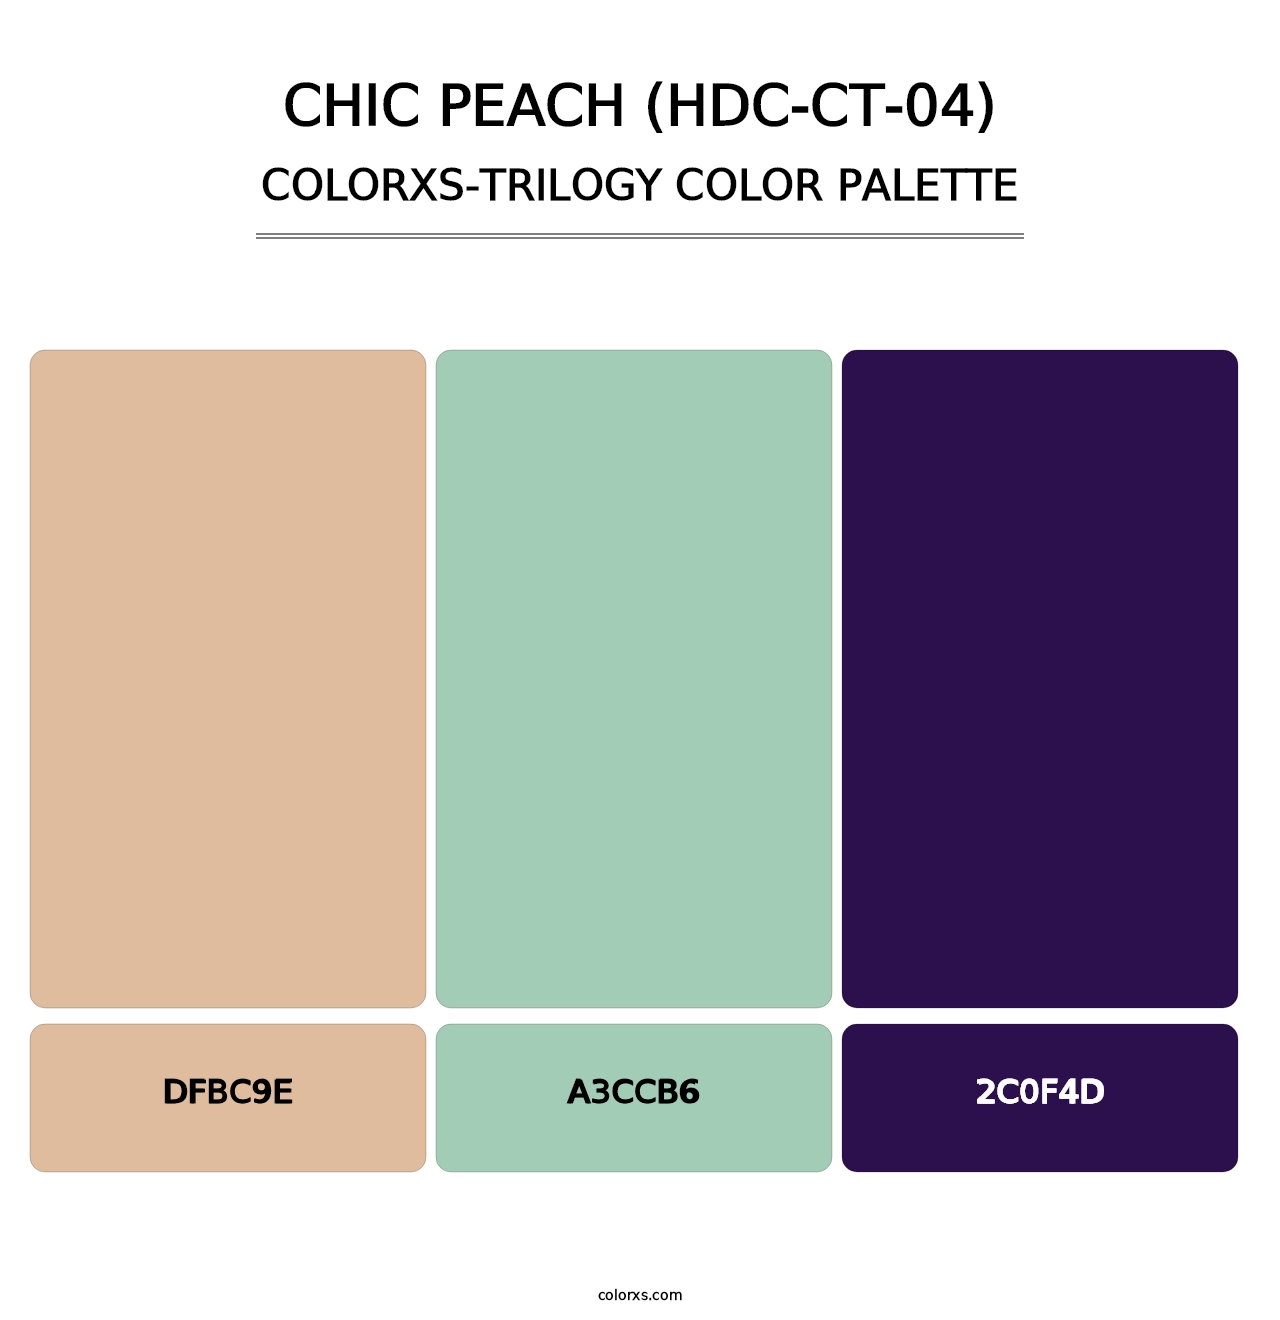 Chic Peach (HDC-CT-04) - Colorxs Trilogy Palette